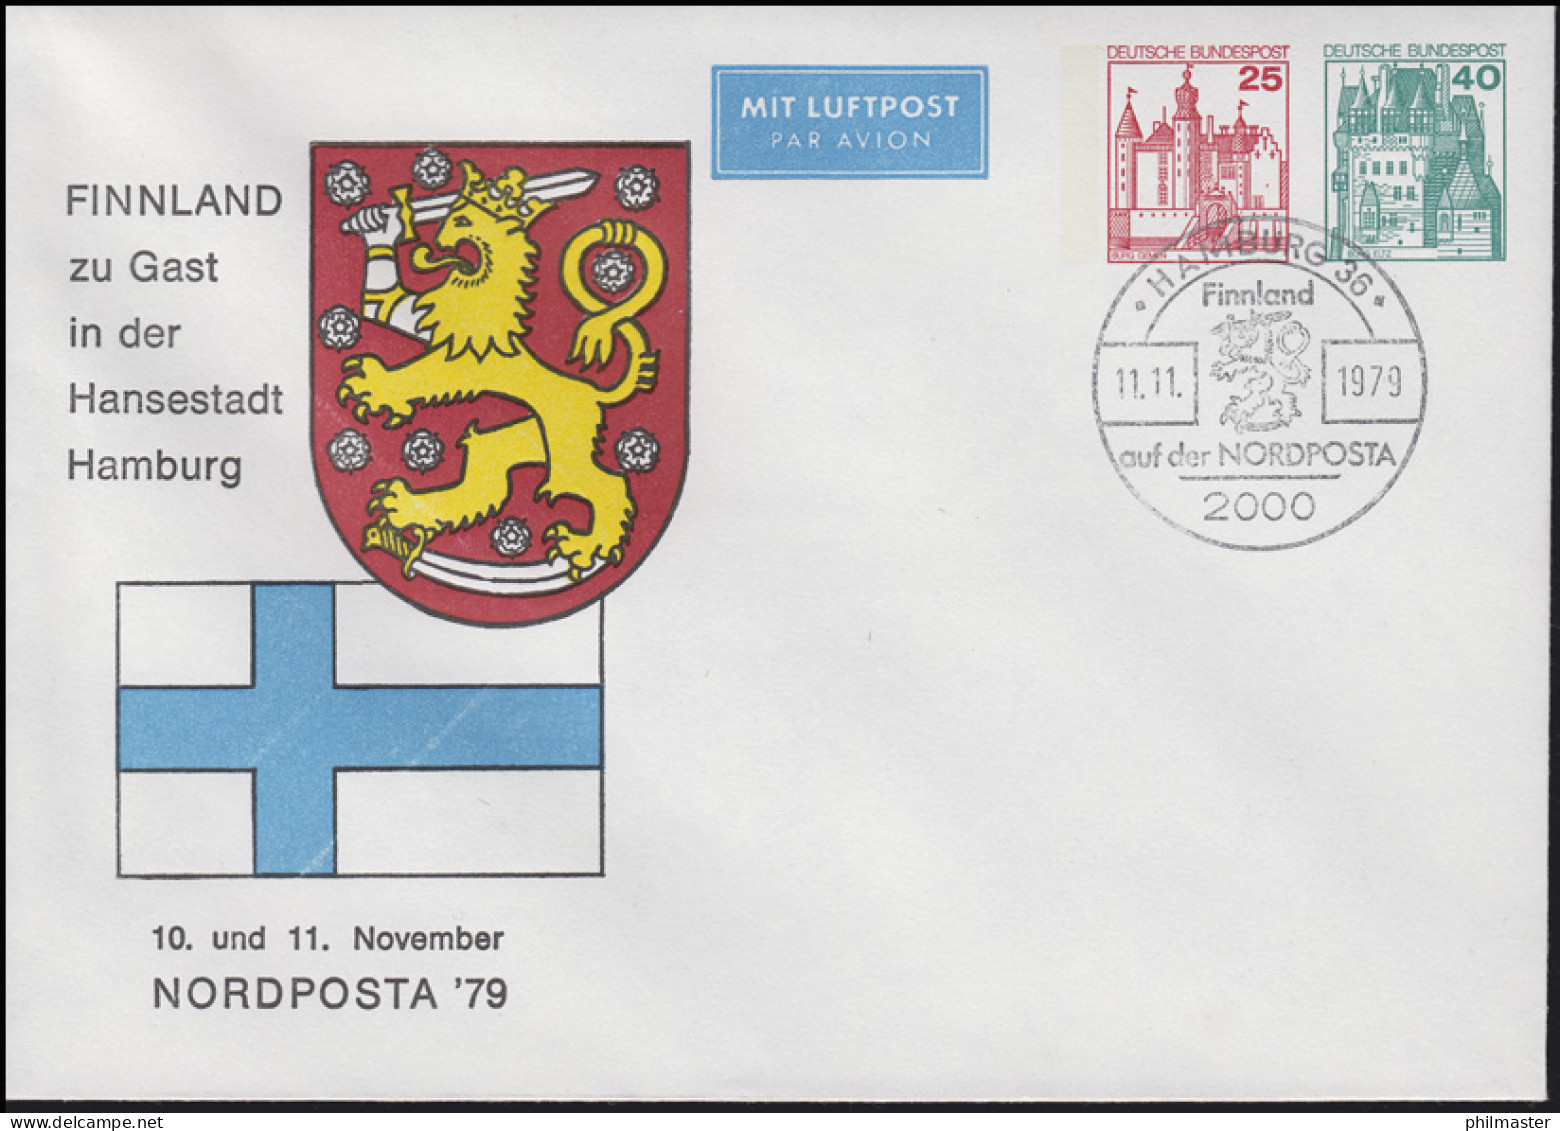 PU 180/2 Finnland Zu Gast In Hansestadt Hamburg SSt HAMBURG NORDPOSTA 11.11.1979 - Private Covers - Mint